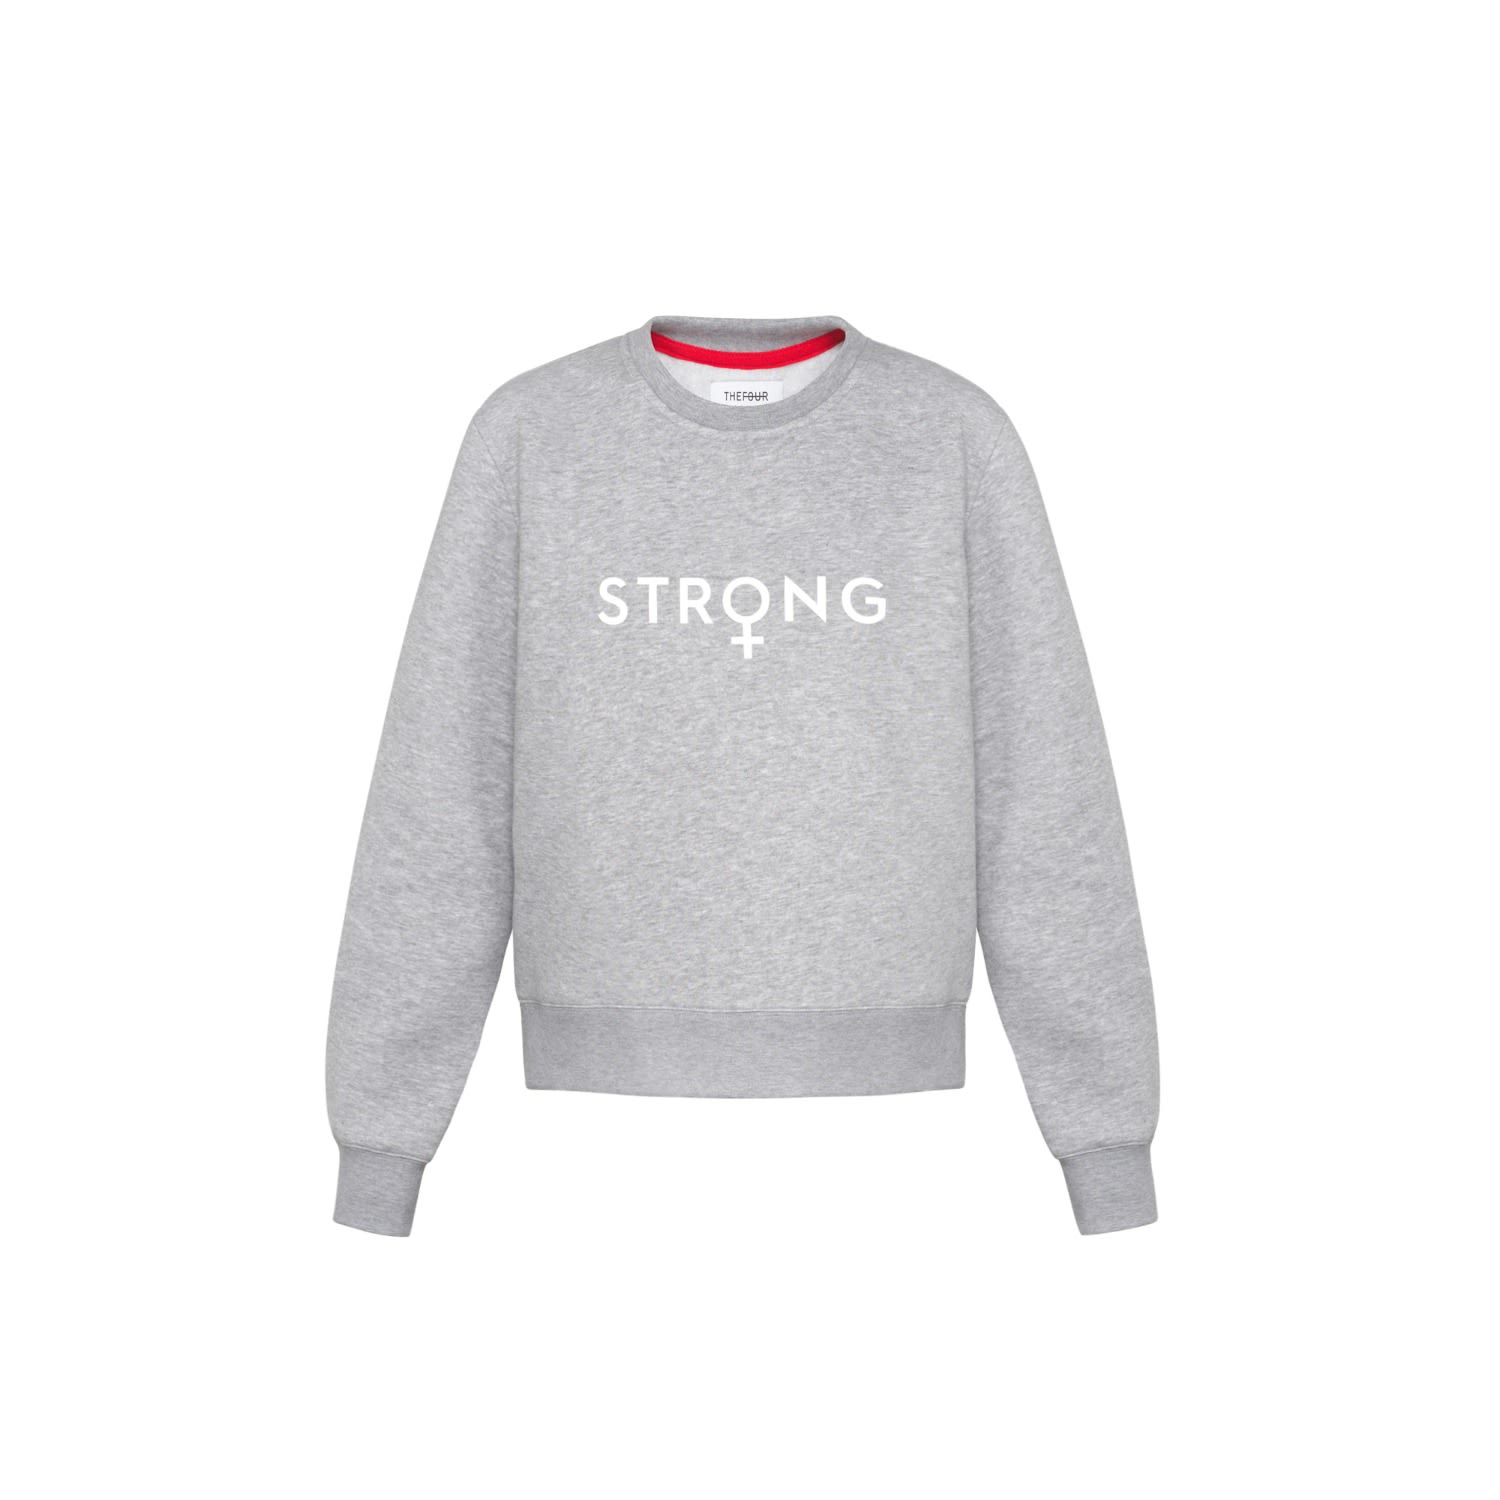 Thefour Women's Strong Unite Sweatshirt - Grey In Gray